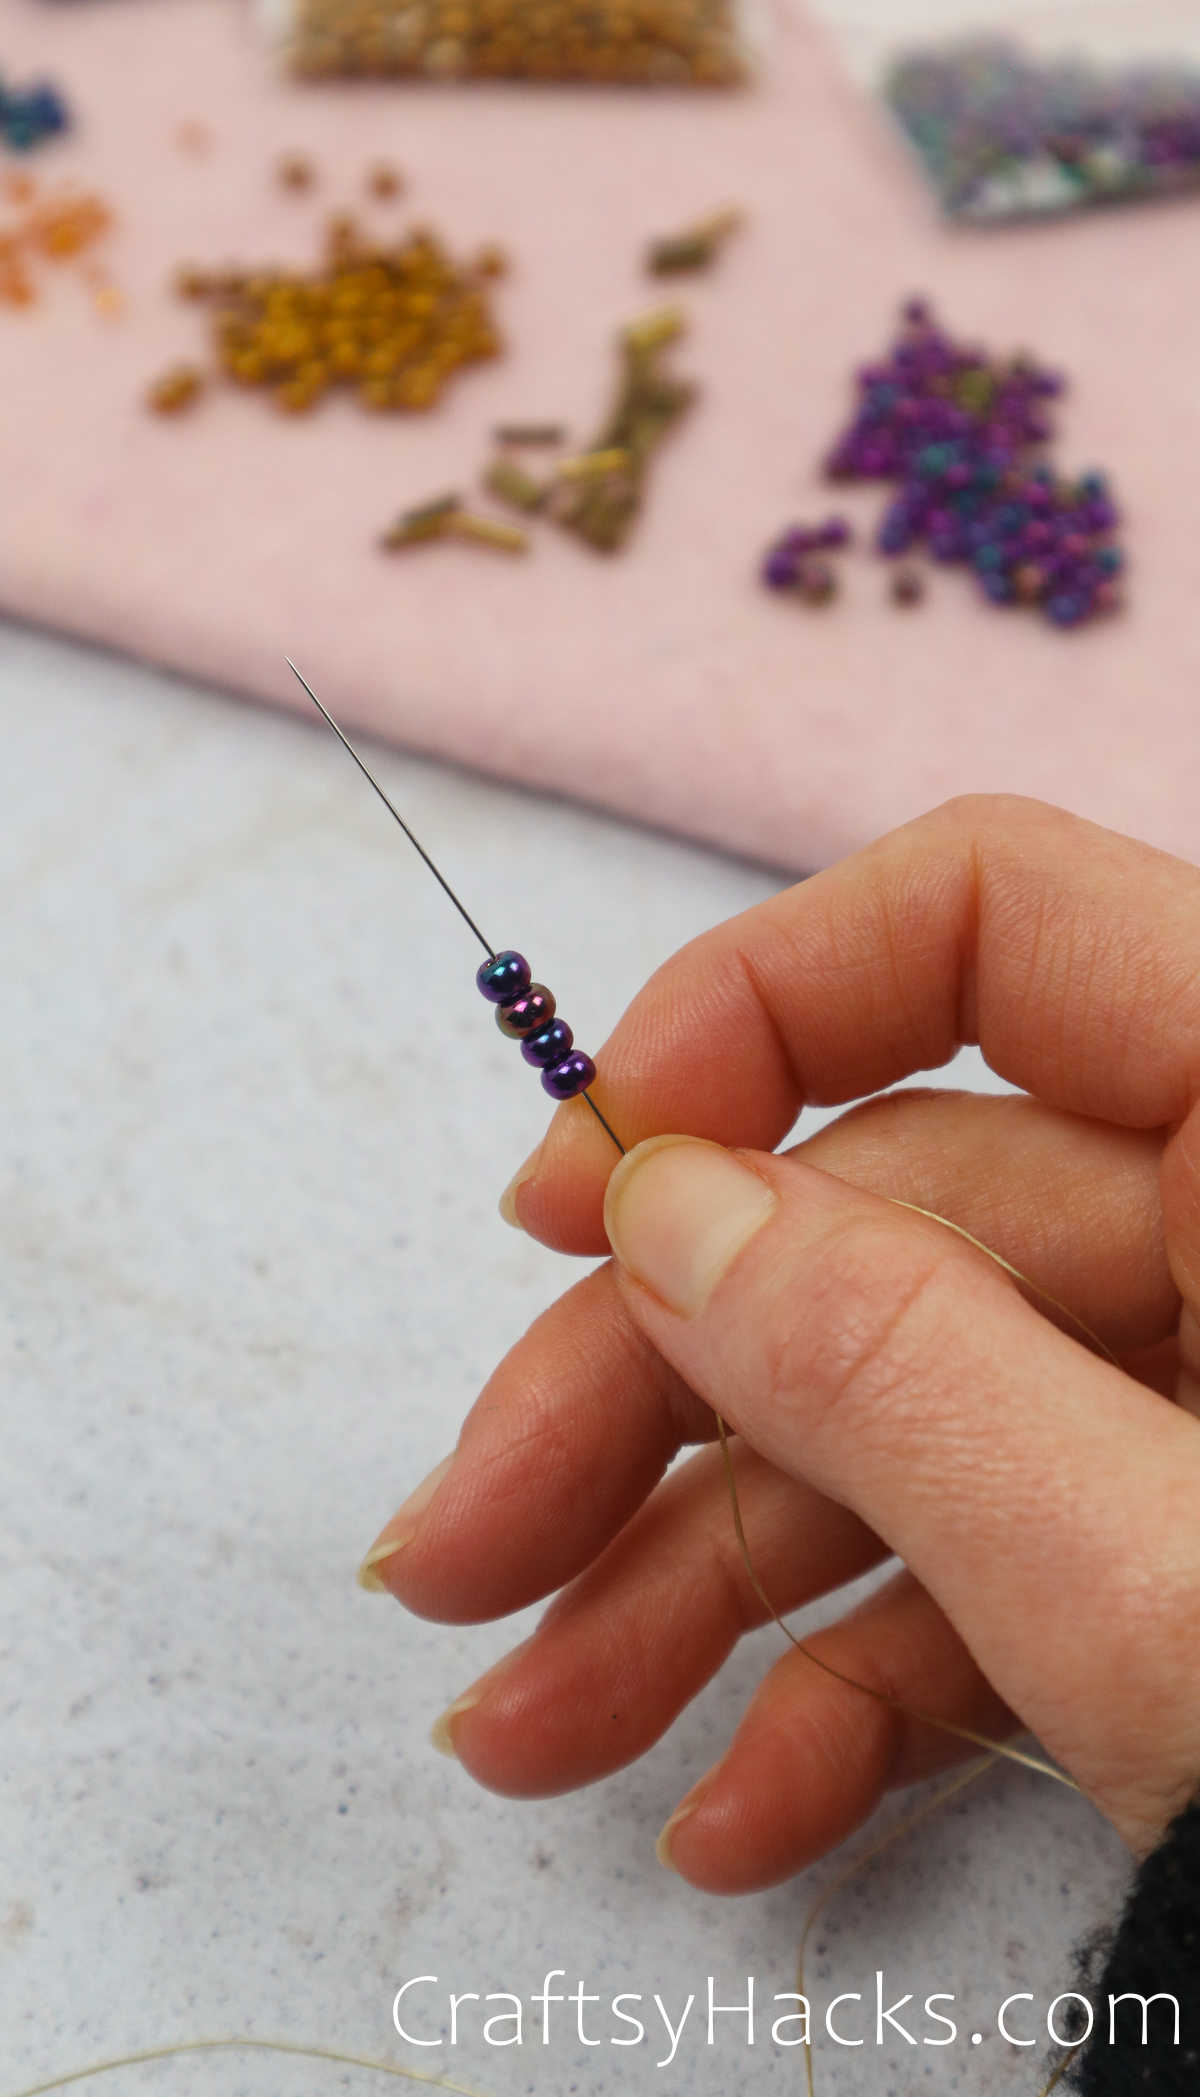 thread beads on to needle